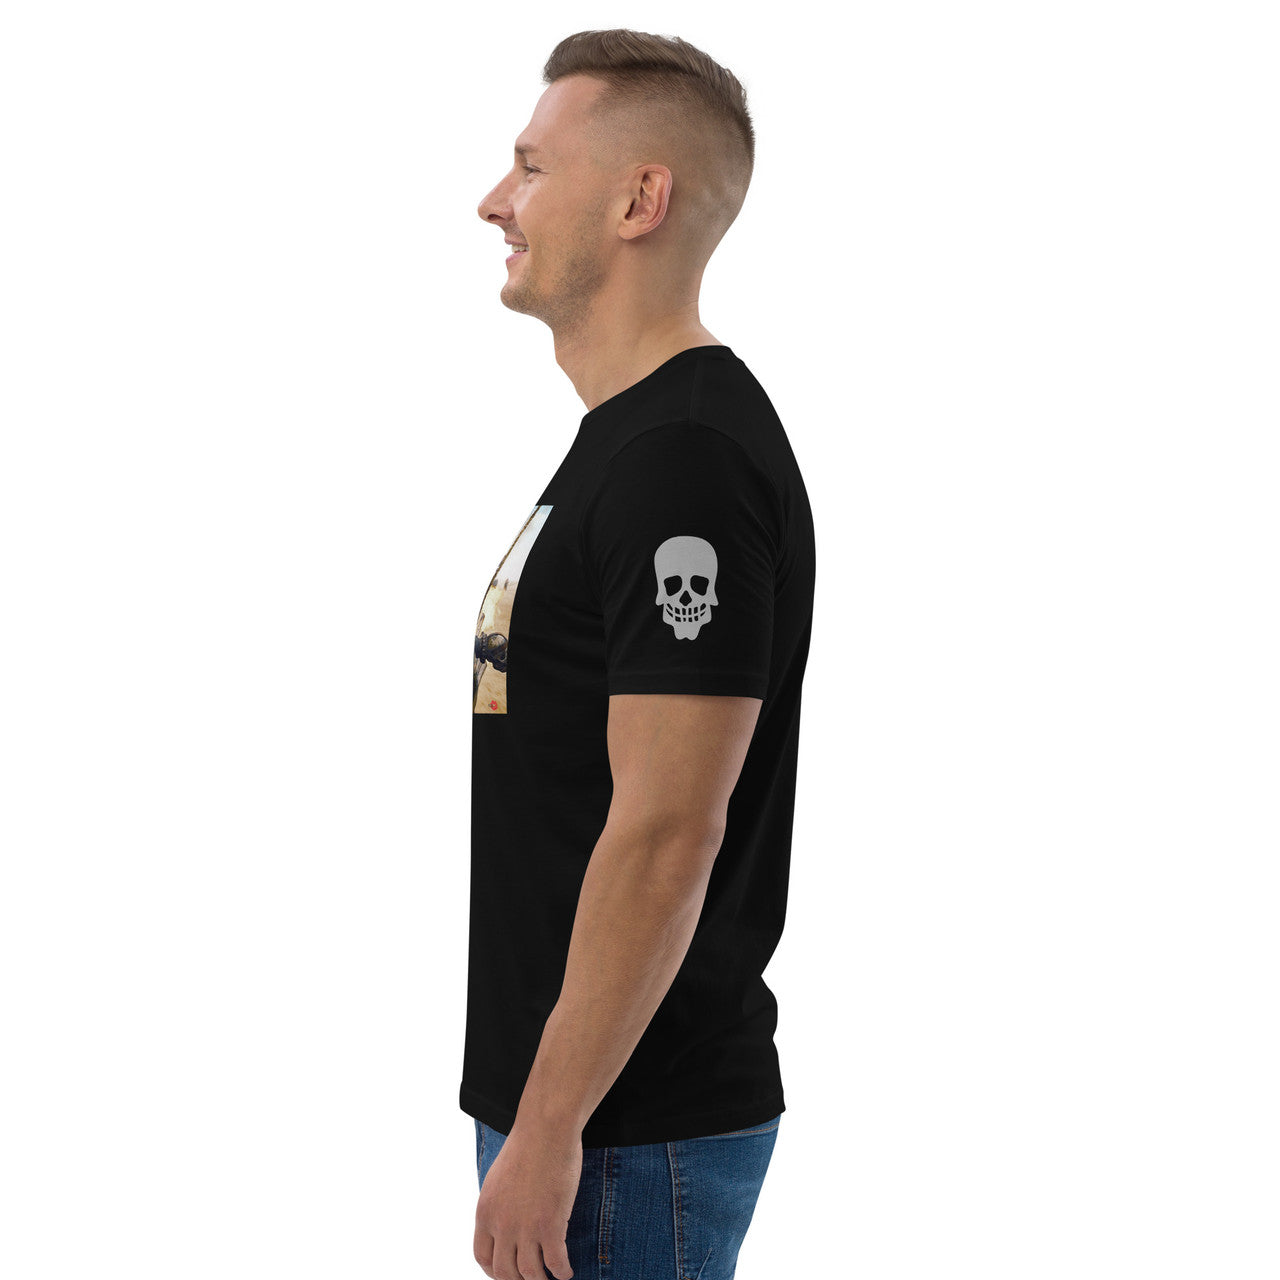 Max Max KiSS Unisex organic cotton t-shirt - Tom Hardy Tattoos skull